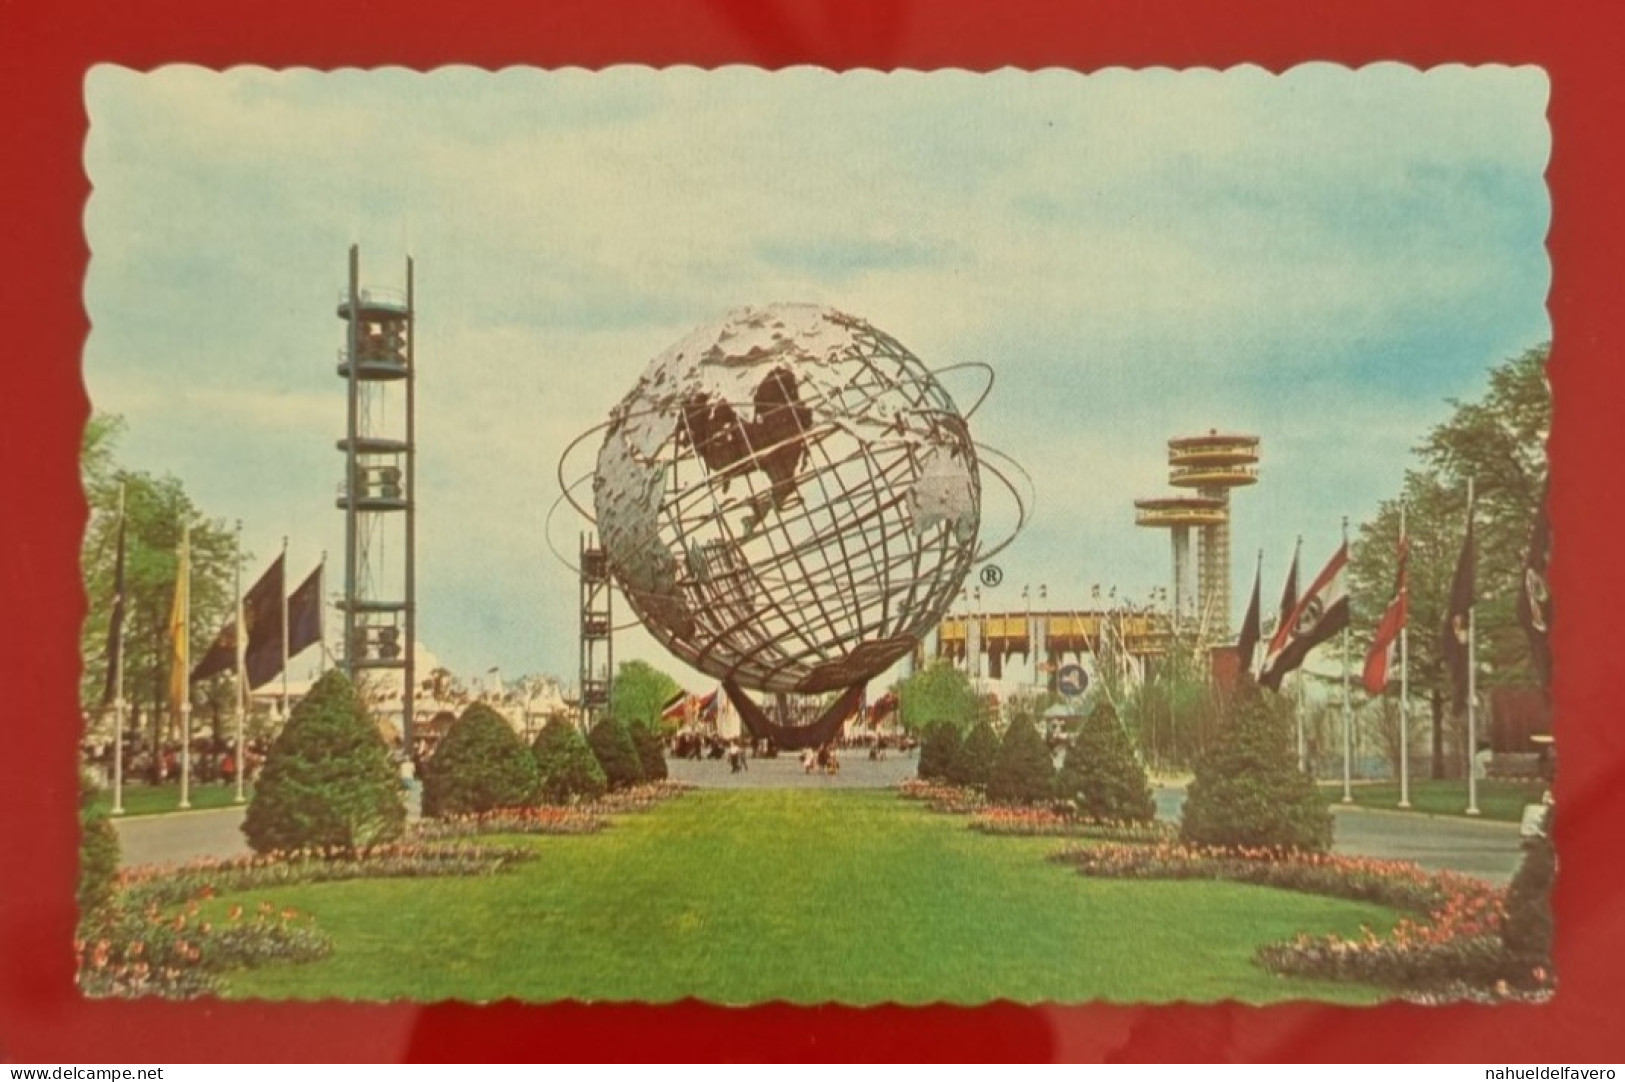 Uncirculated Postcard - USA - NY, NEW YORK WORLD'S FAIR 1964-65 - UNISPHERE - Exhibitions